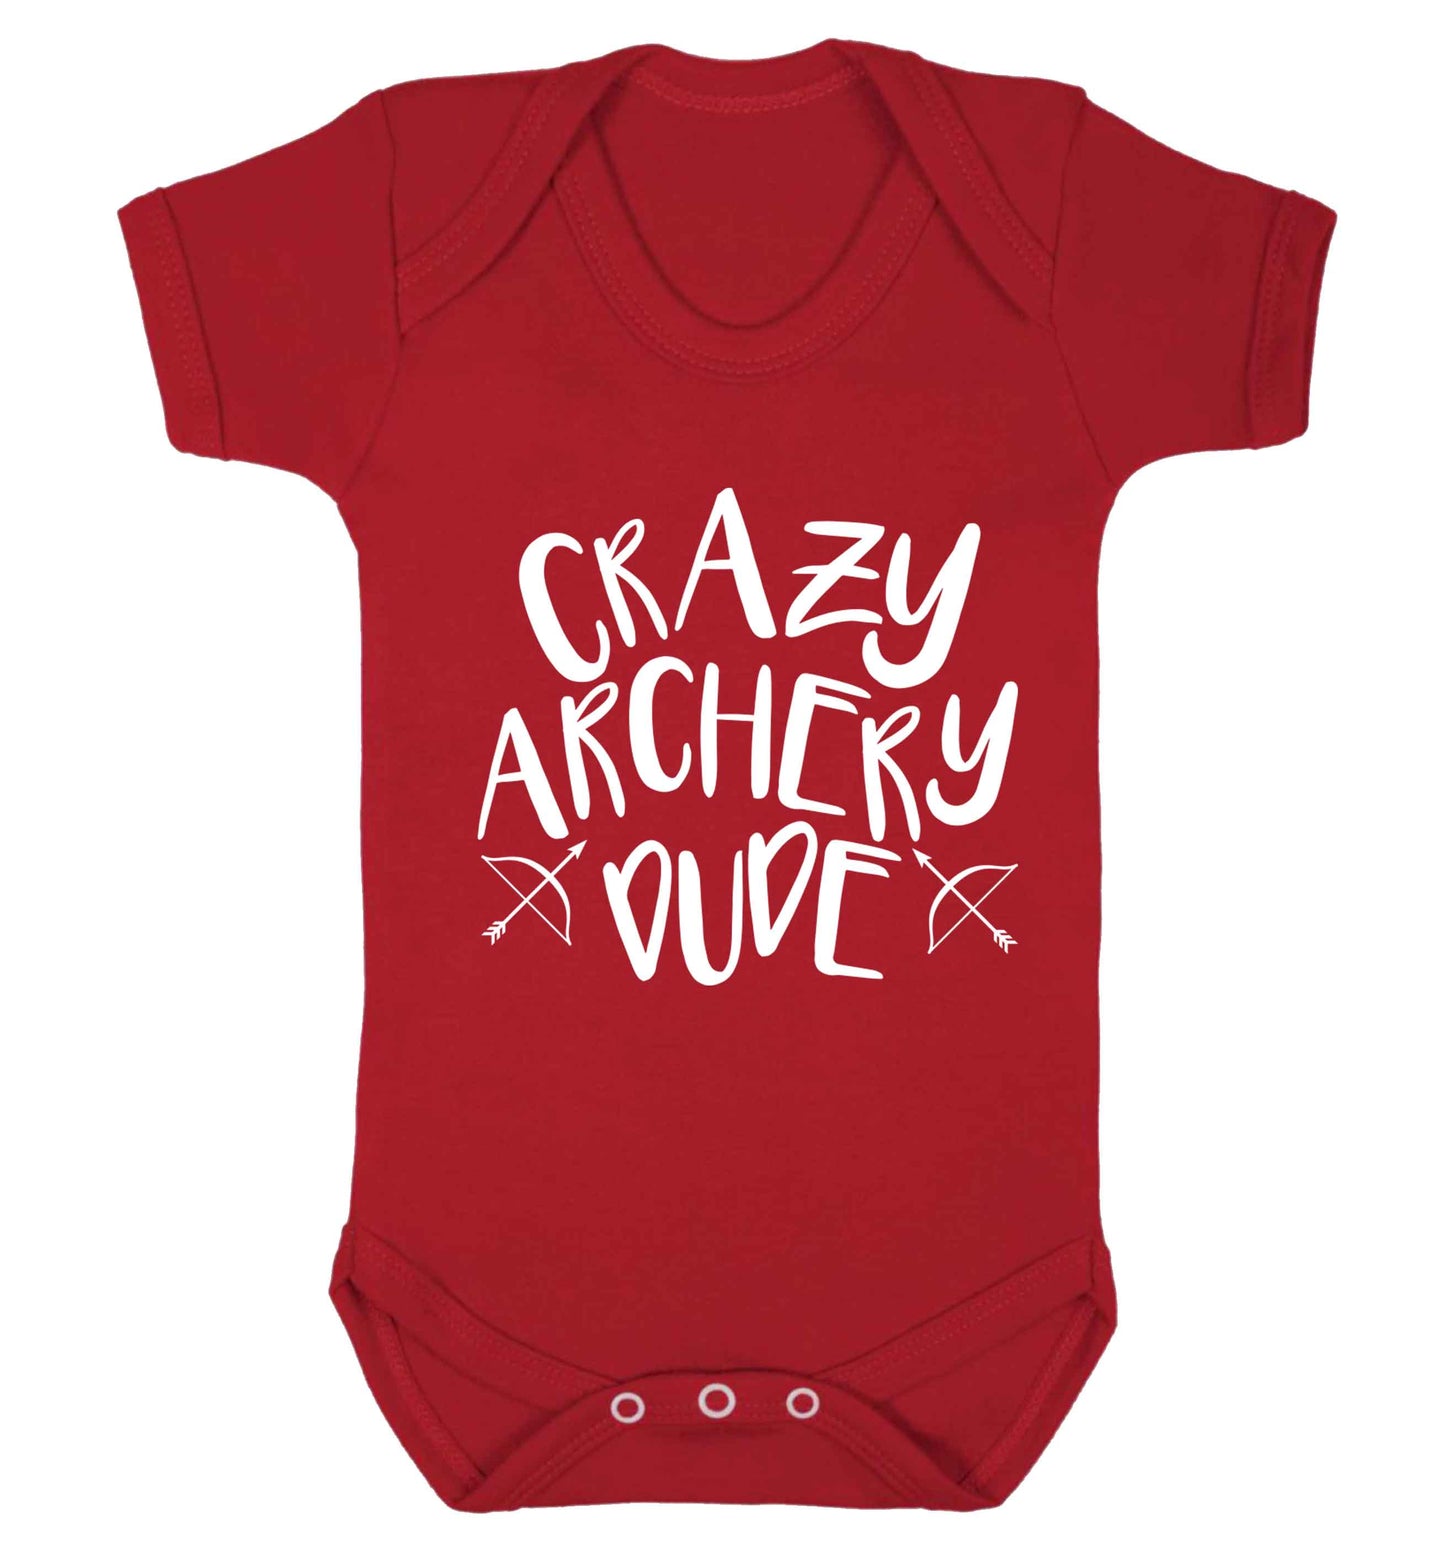 Crazy archery dude Baby Vest red 18-24 months